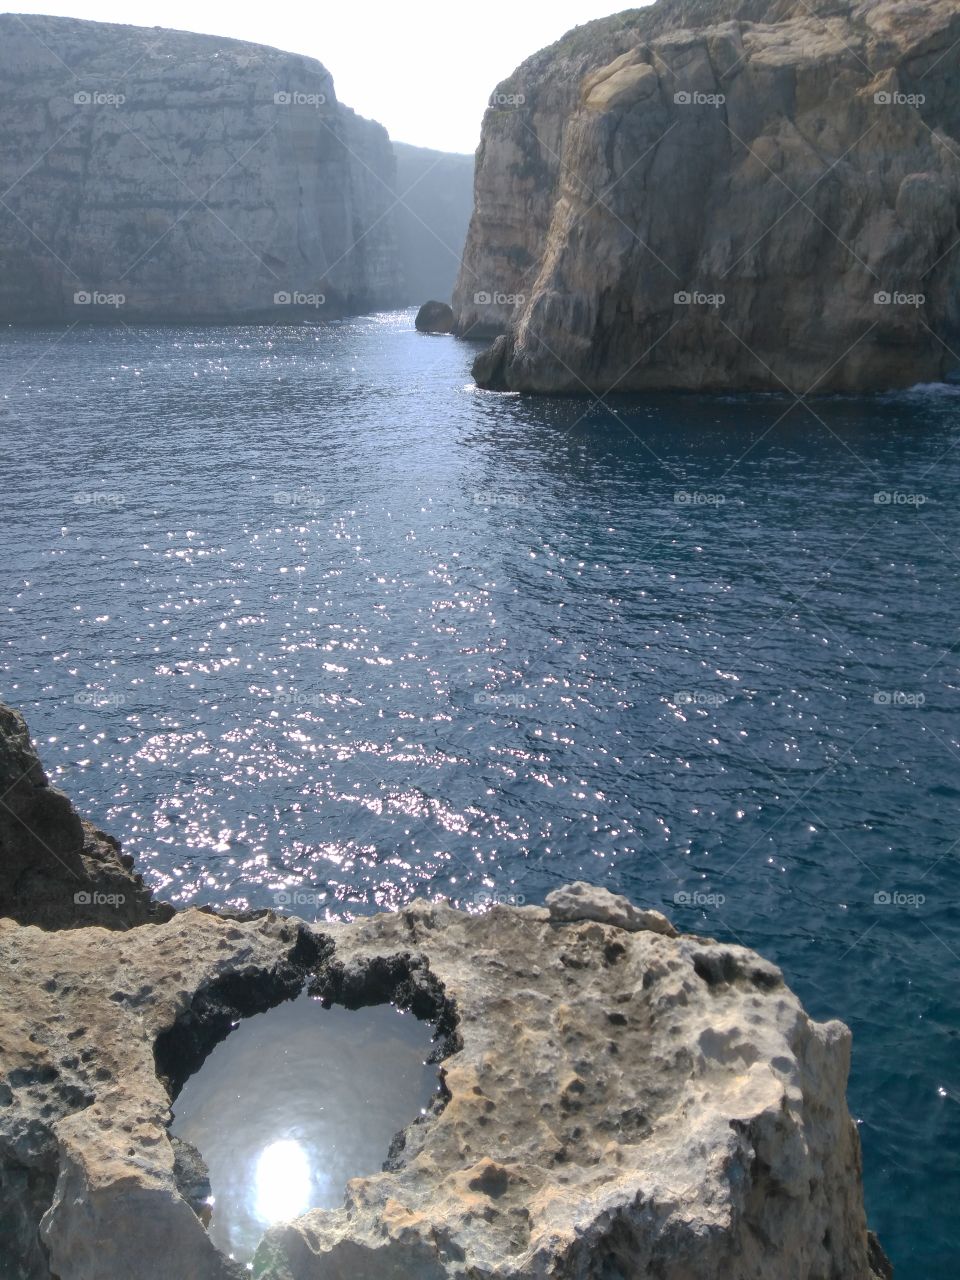 sheer cliffs of Gozo's Dwerja bay, home to blue window